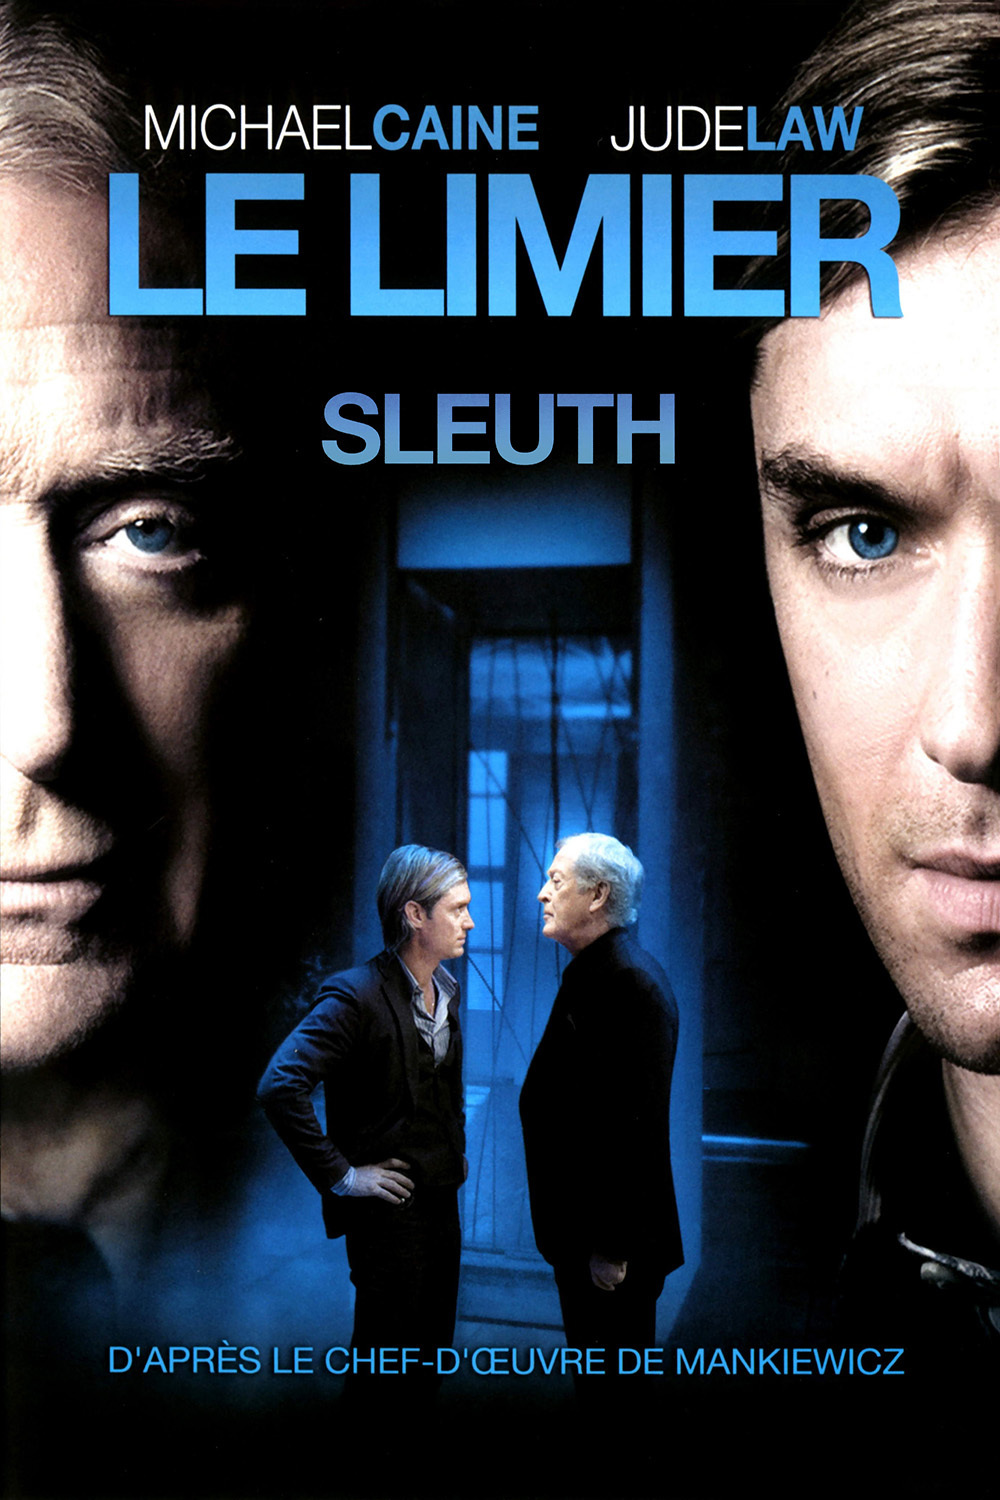 Le Limier : Sleuth